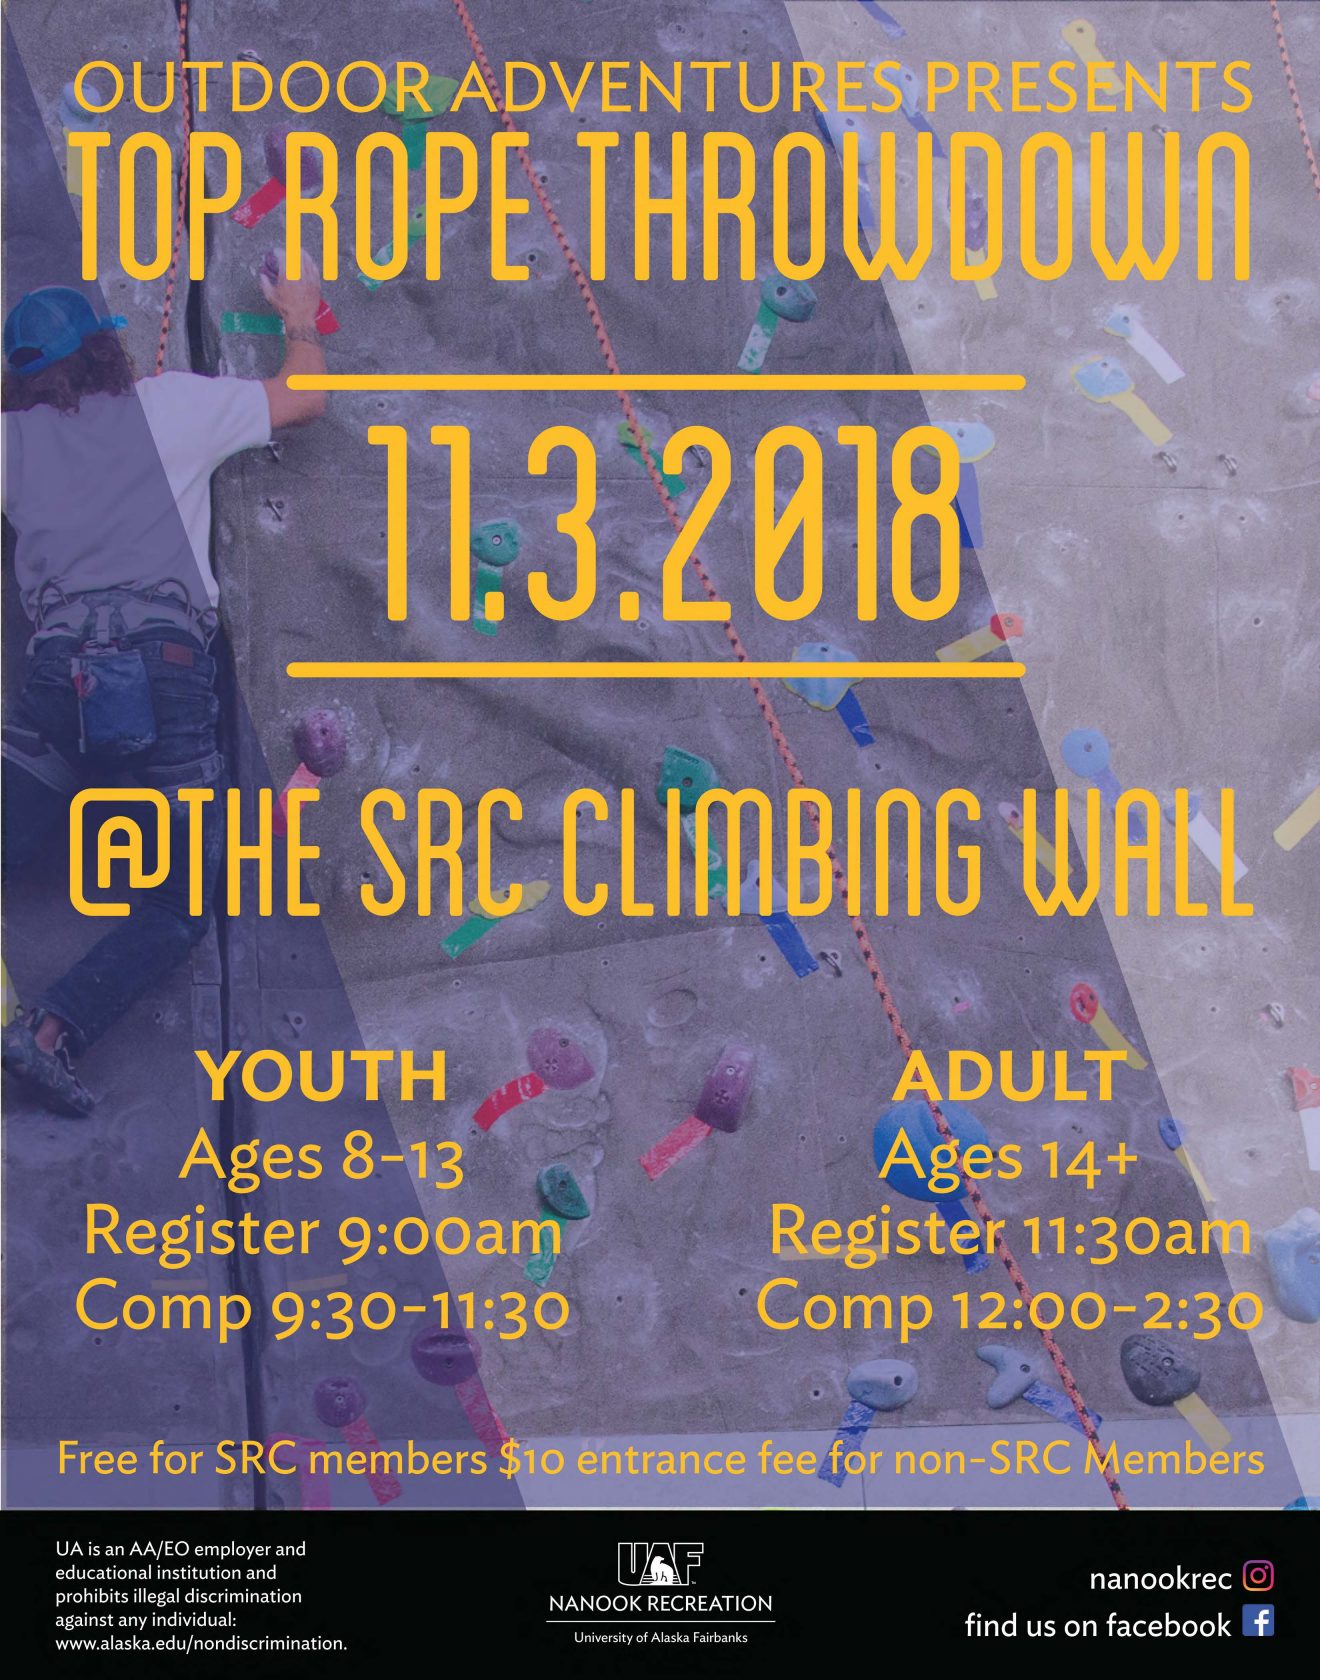 Top rope throwdown poster